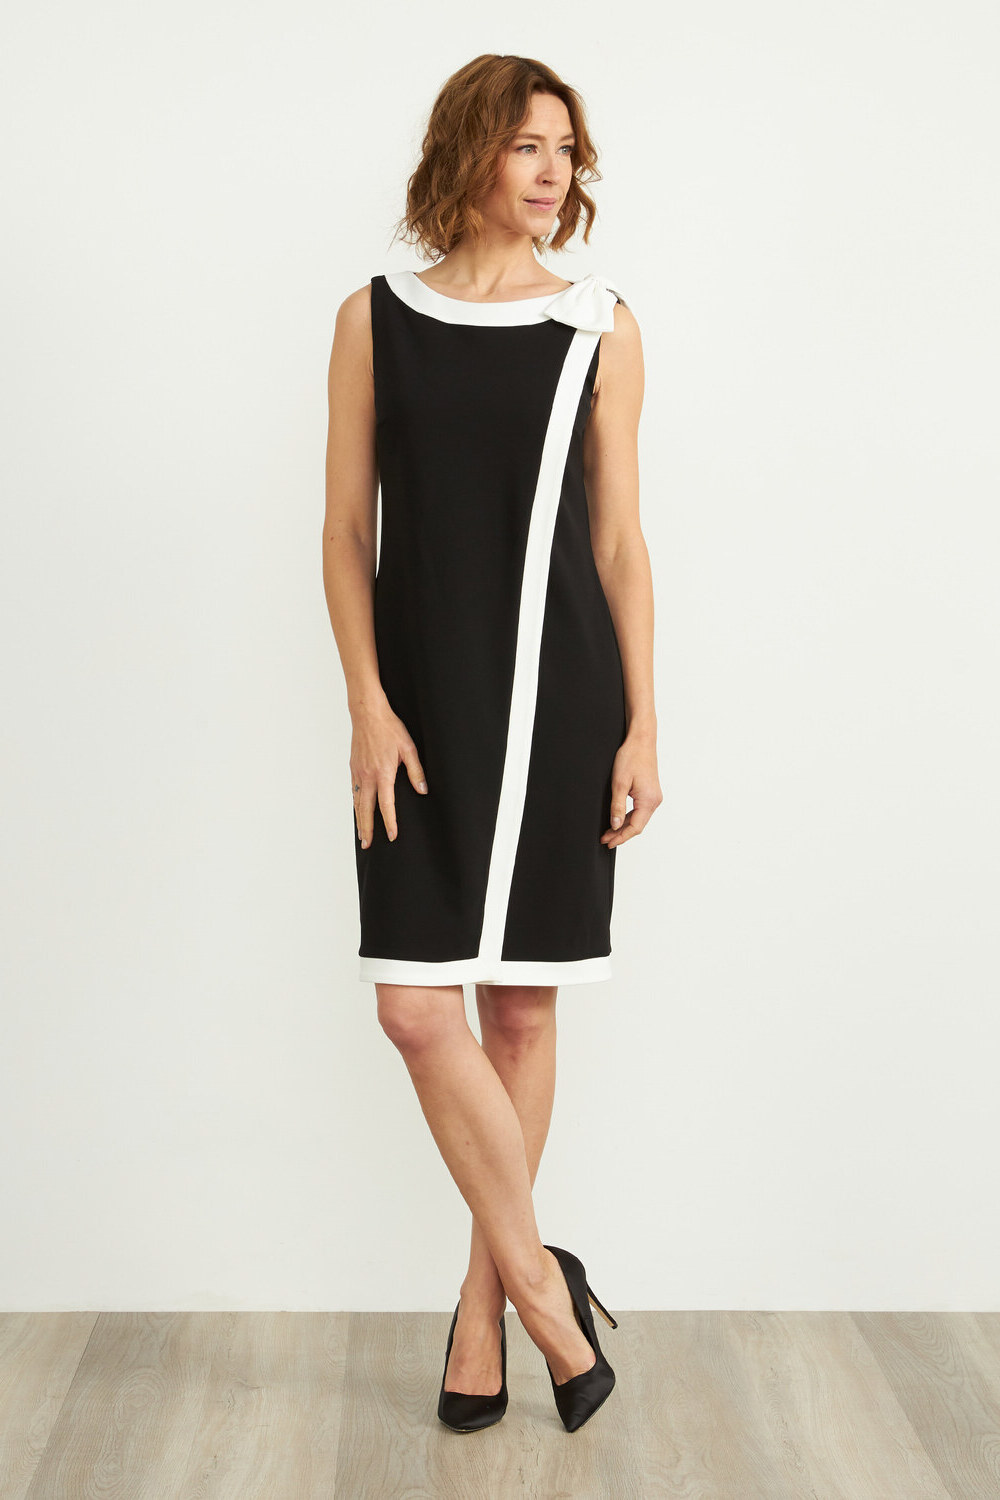 Joseph Ribkoff Sleeveless Shift Dress Style 203146. Black/vanilla